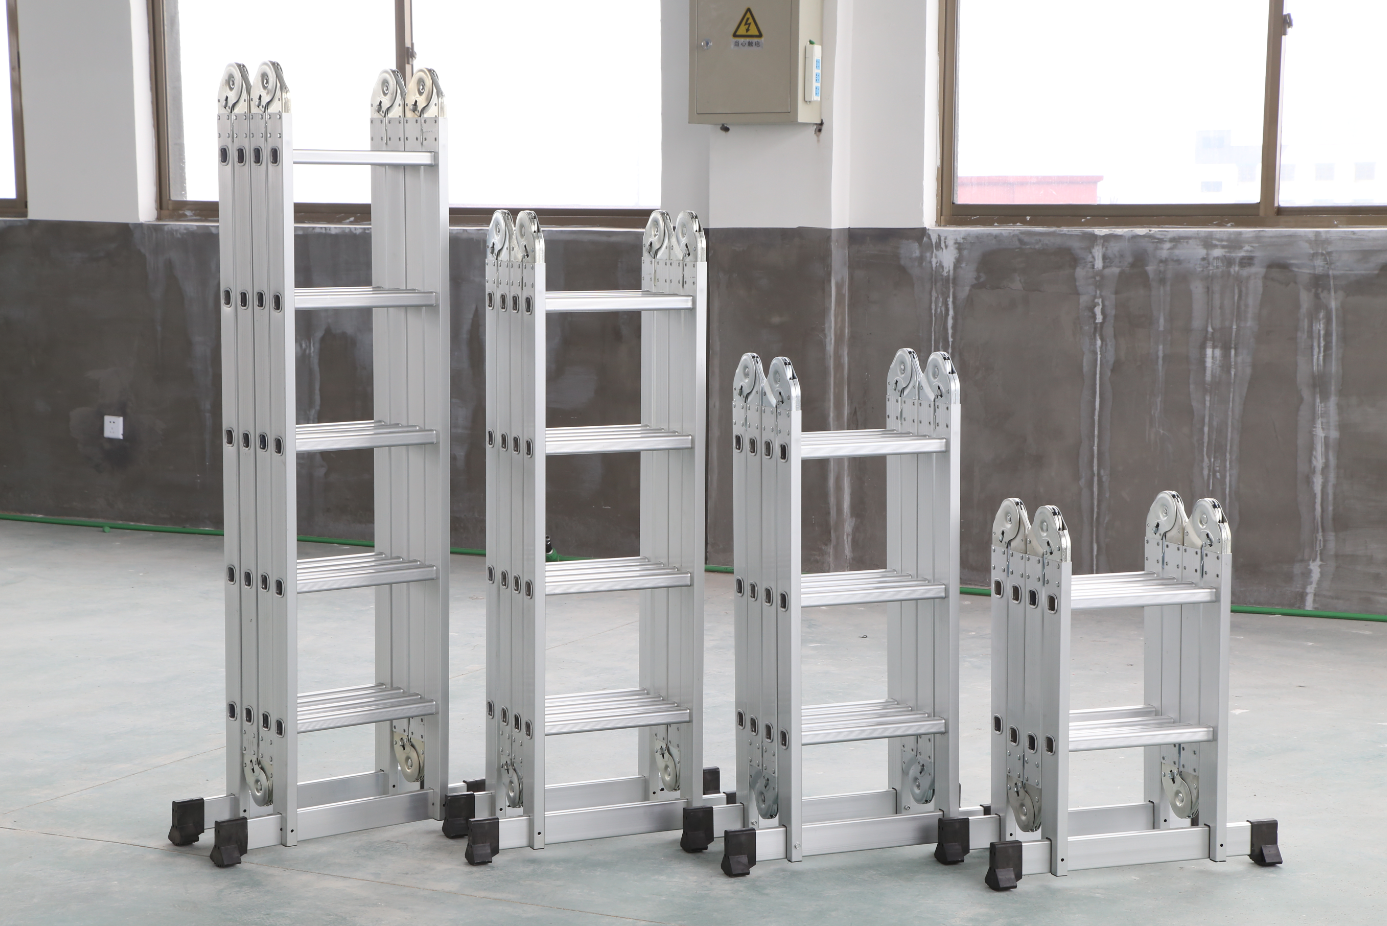 Multi purpose aluminum folding step ladder 12.5ft foldable scaffolding ladders